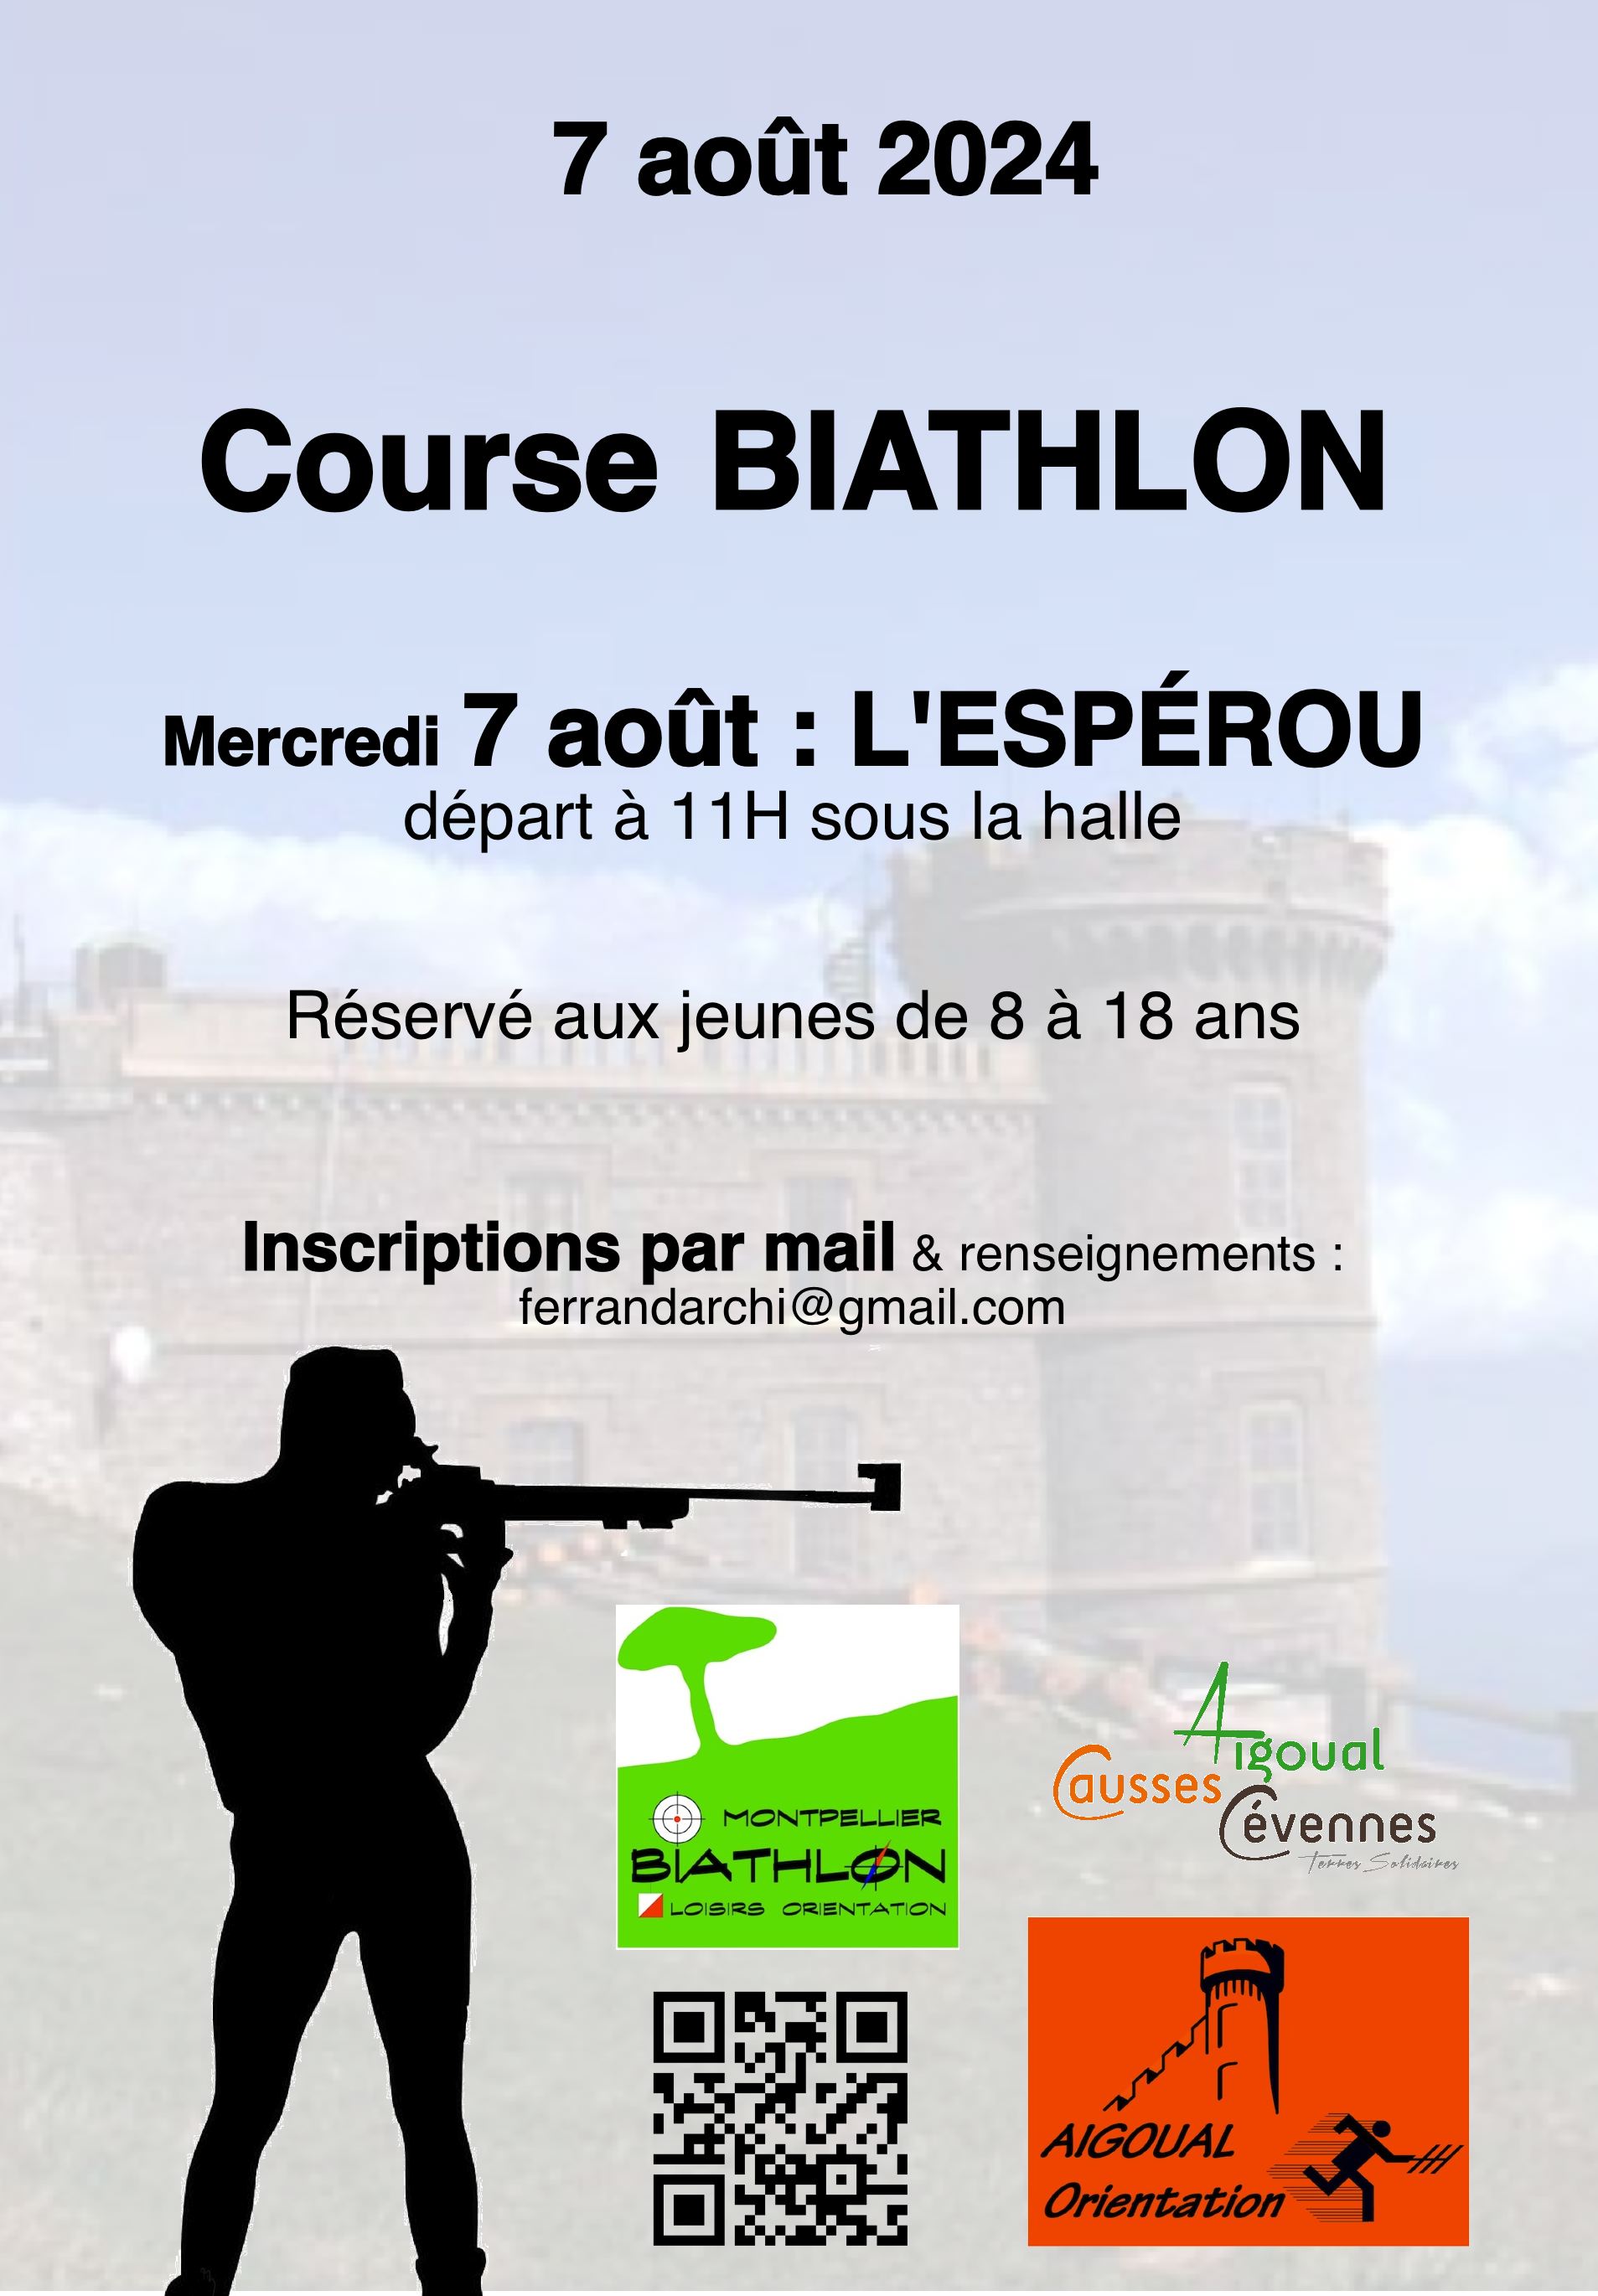 Course biathlon